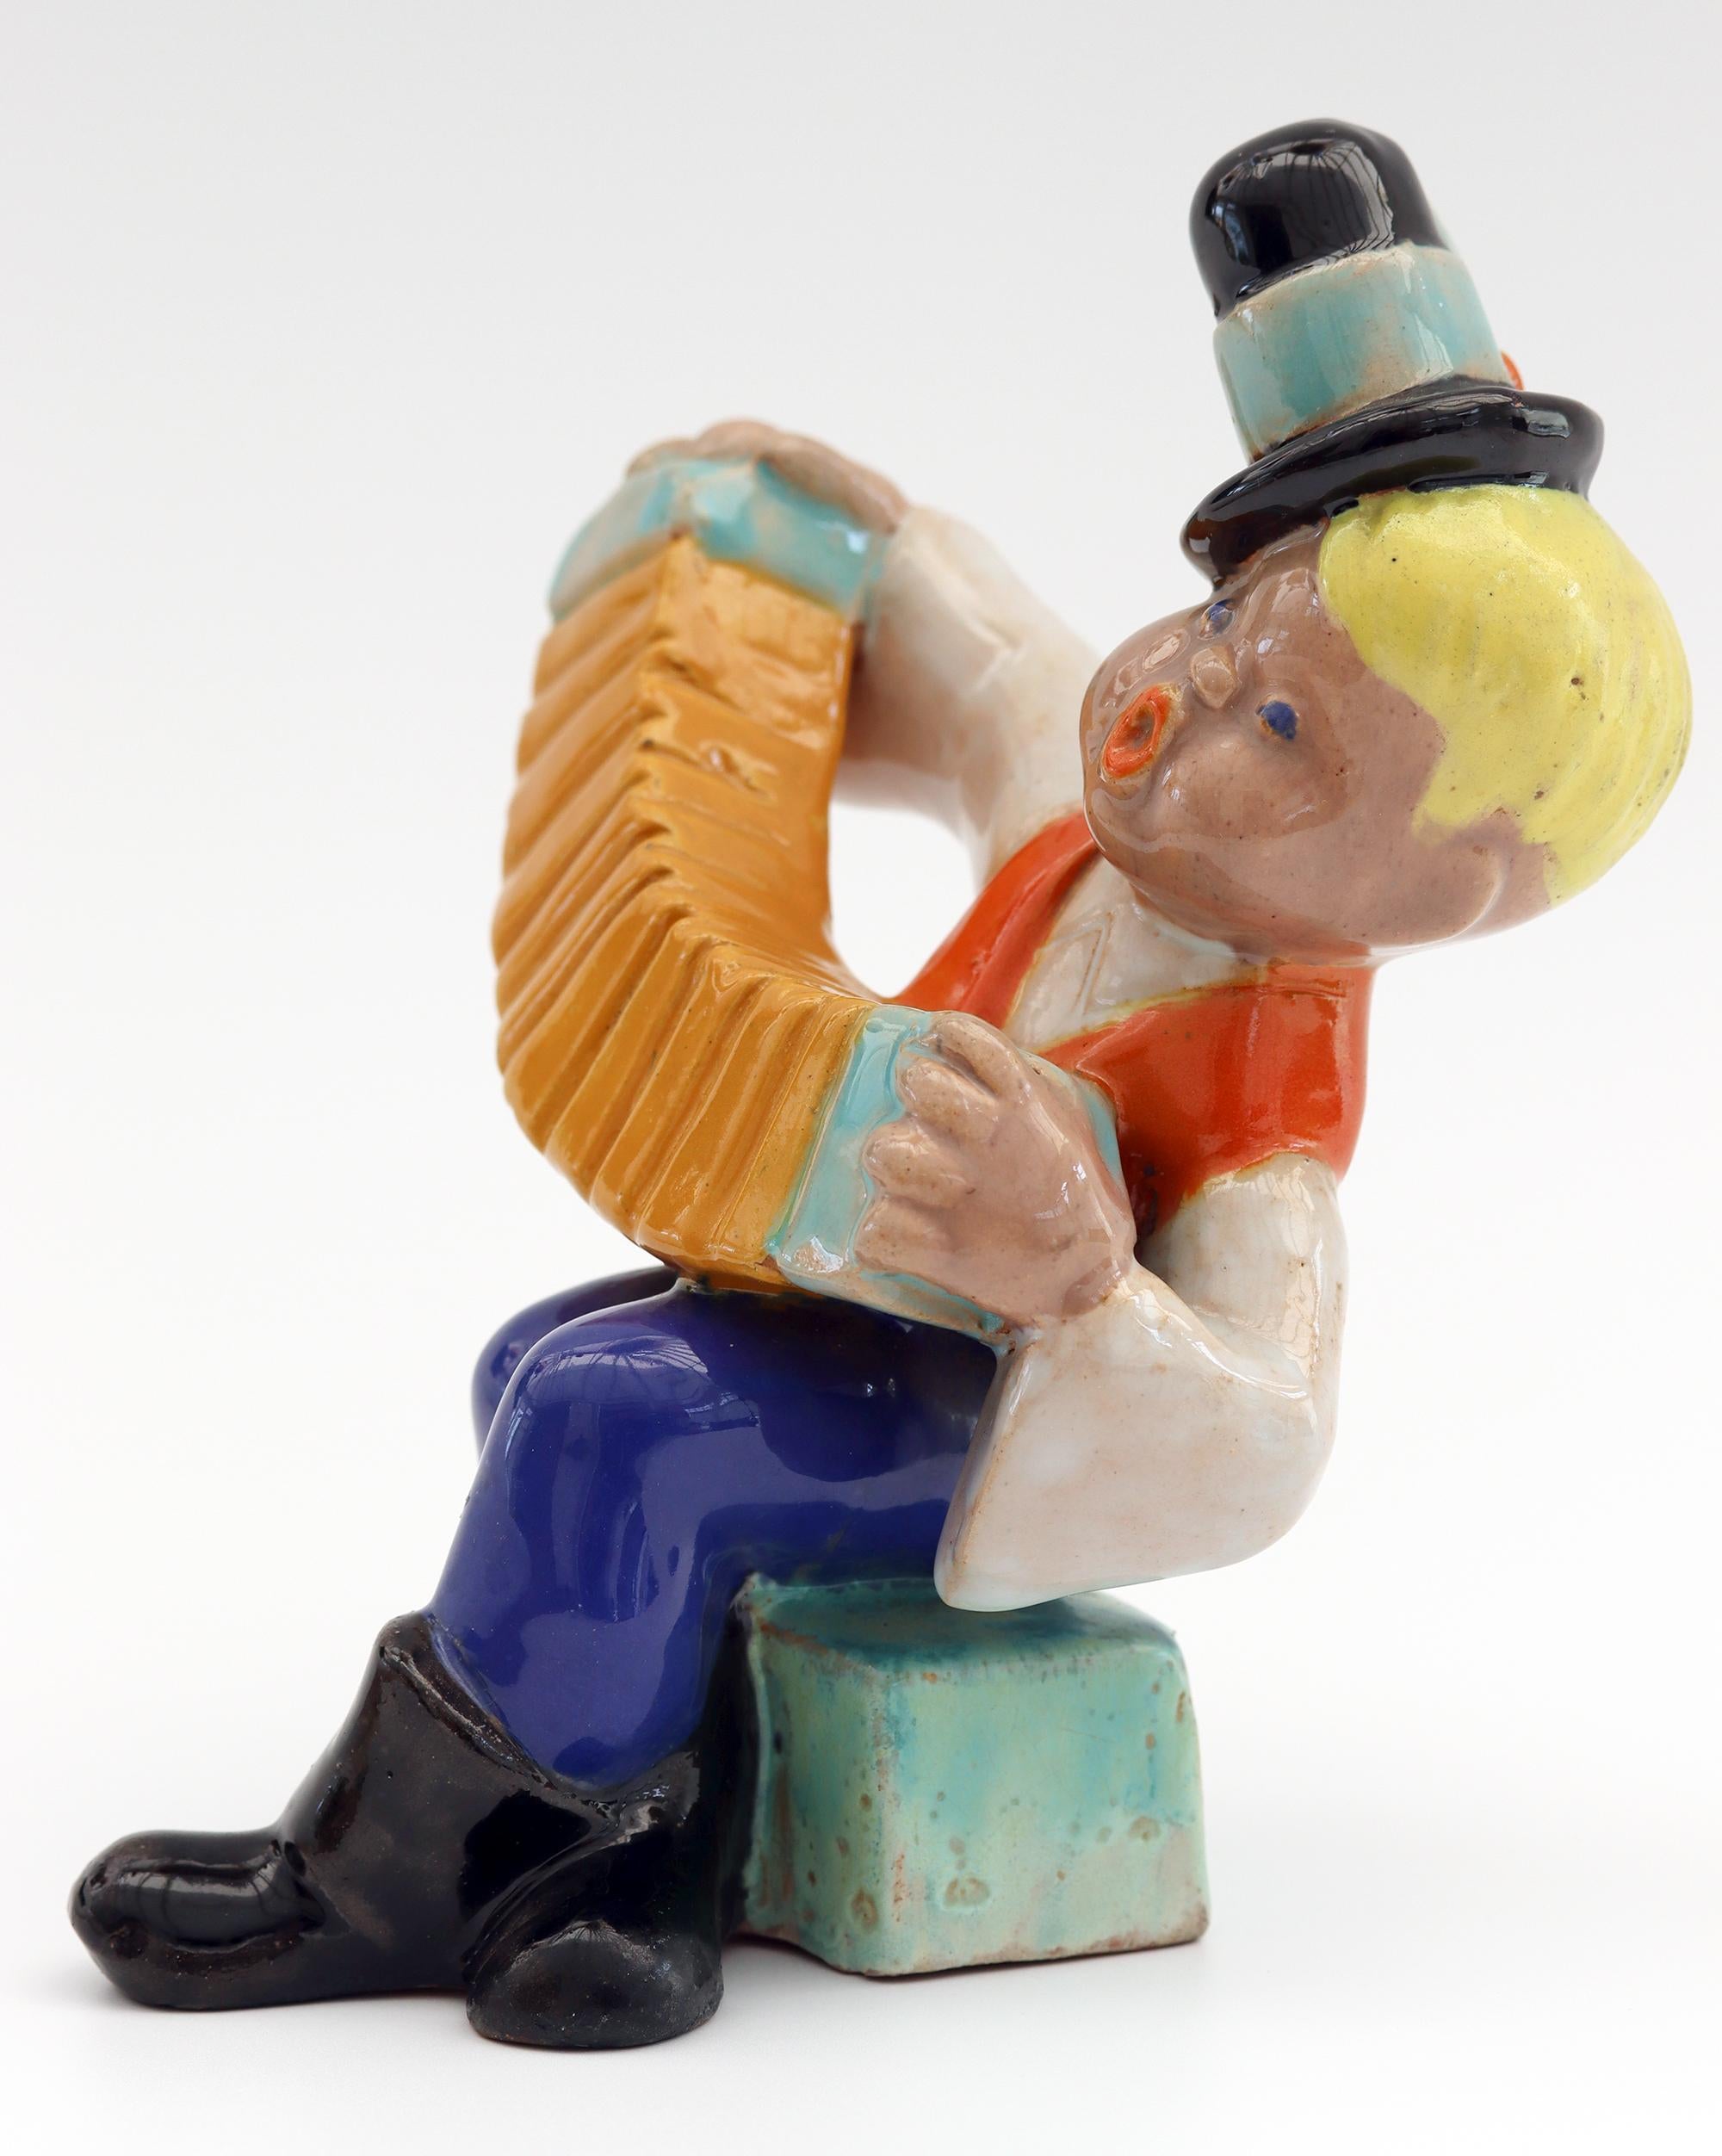 Komlos Hungarian Art Deco Pottery Musician Figure, circa 1930 For Sale 3